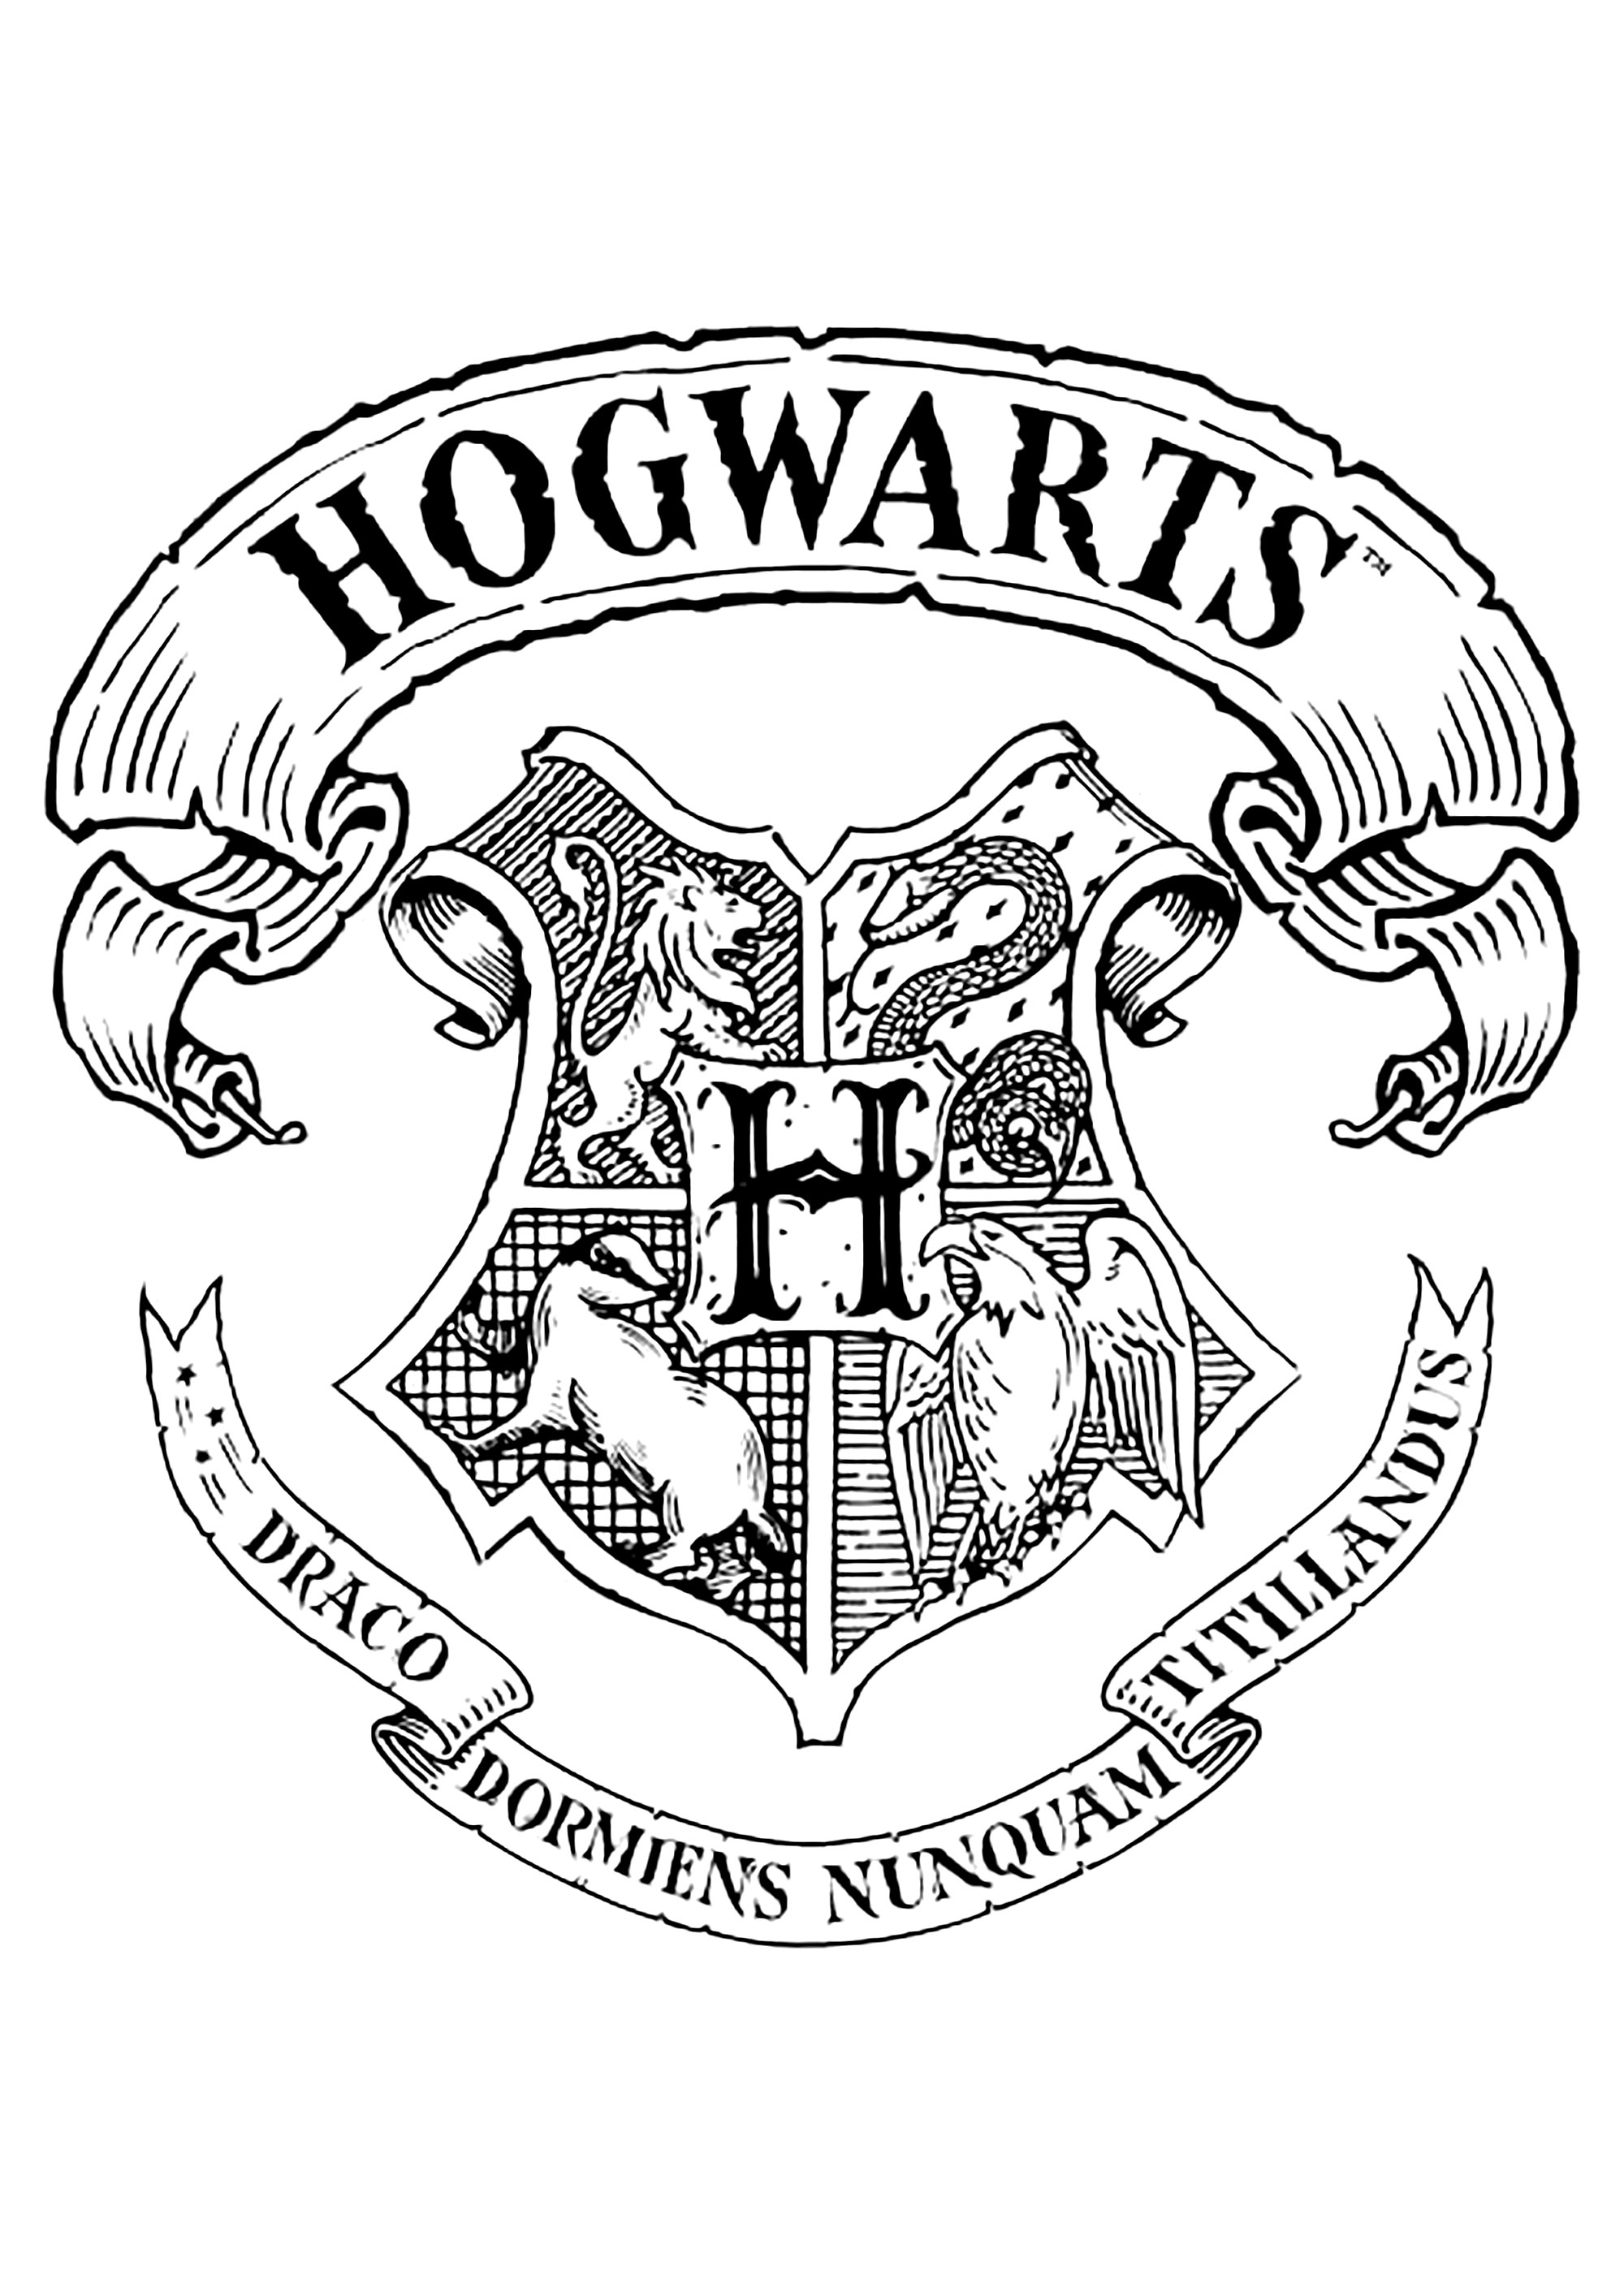 harry-potter-hogwarts-crest-women39s-tshirt-white-xxl-white-harry-potter-coloring-pages-harry-potter-colors-harry-potter-drawings.jpg